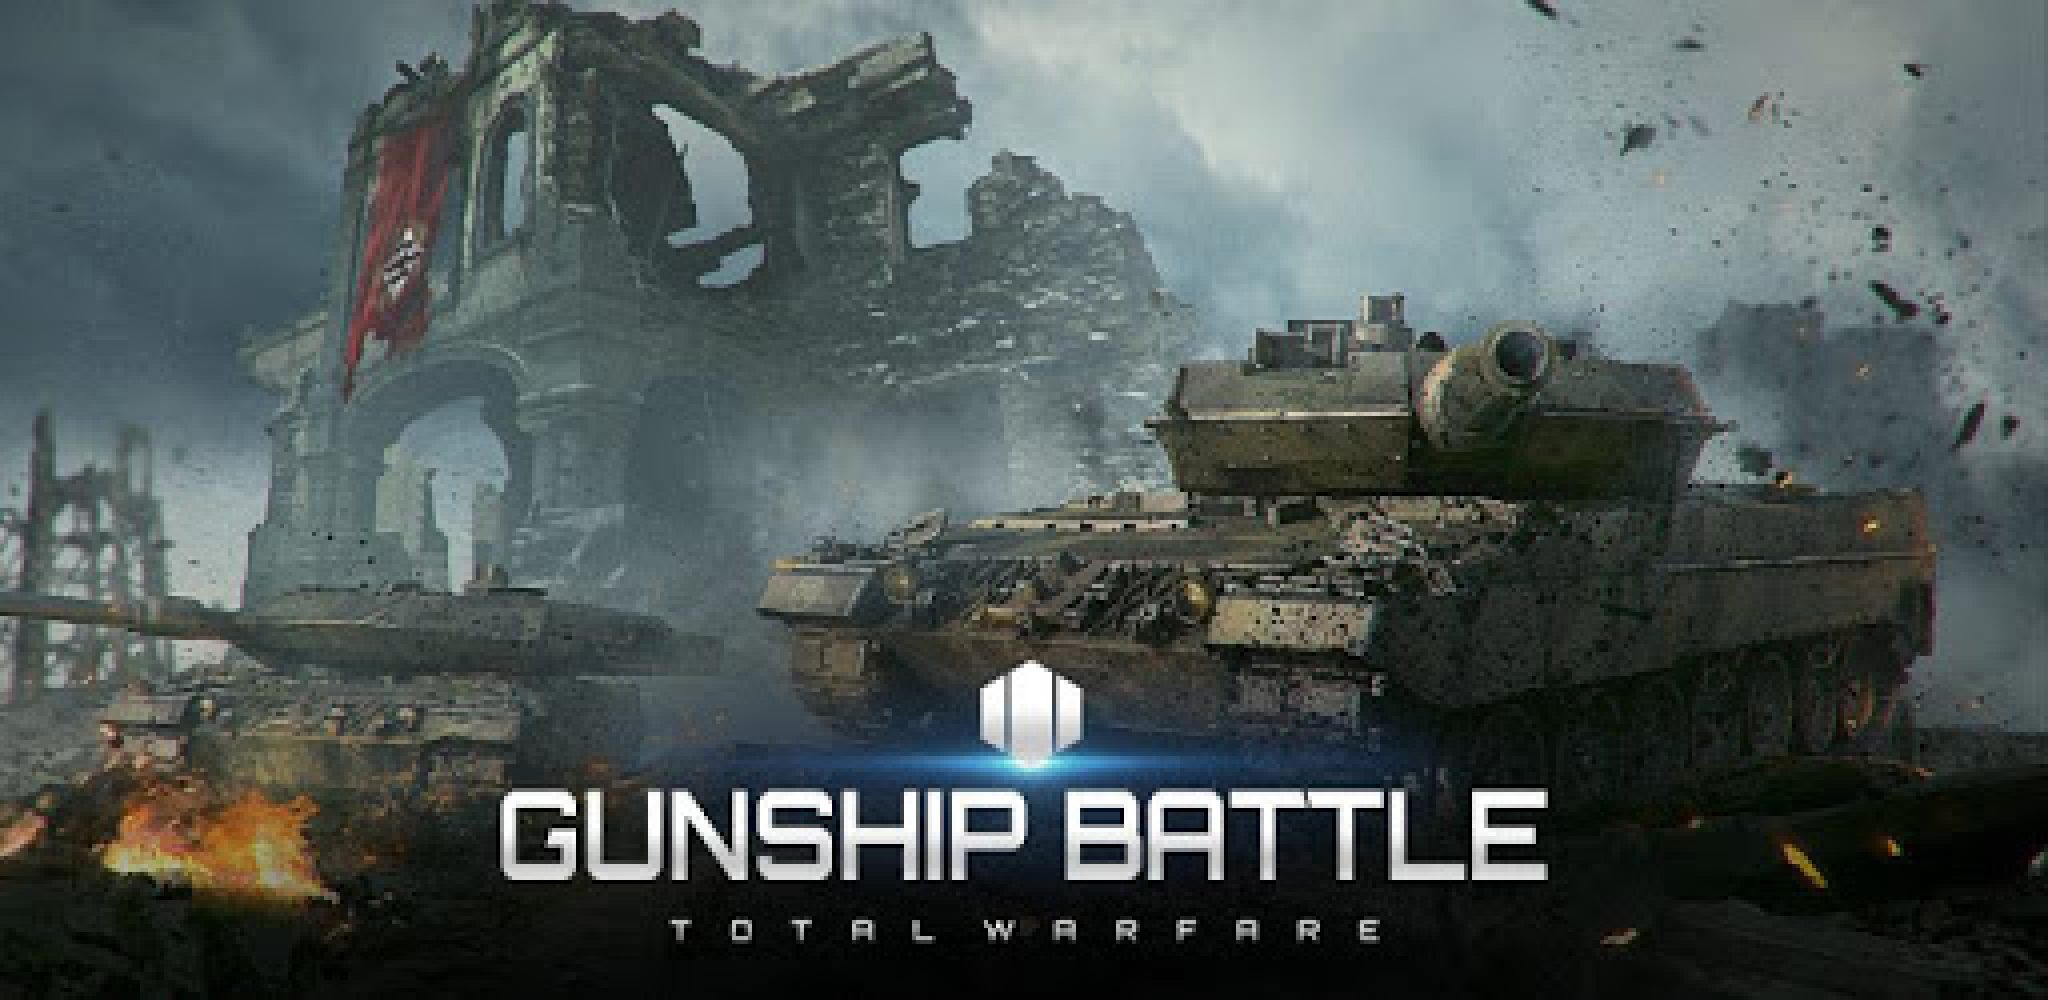 gunship battle latest version mod apk